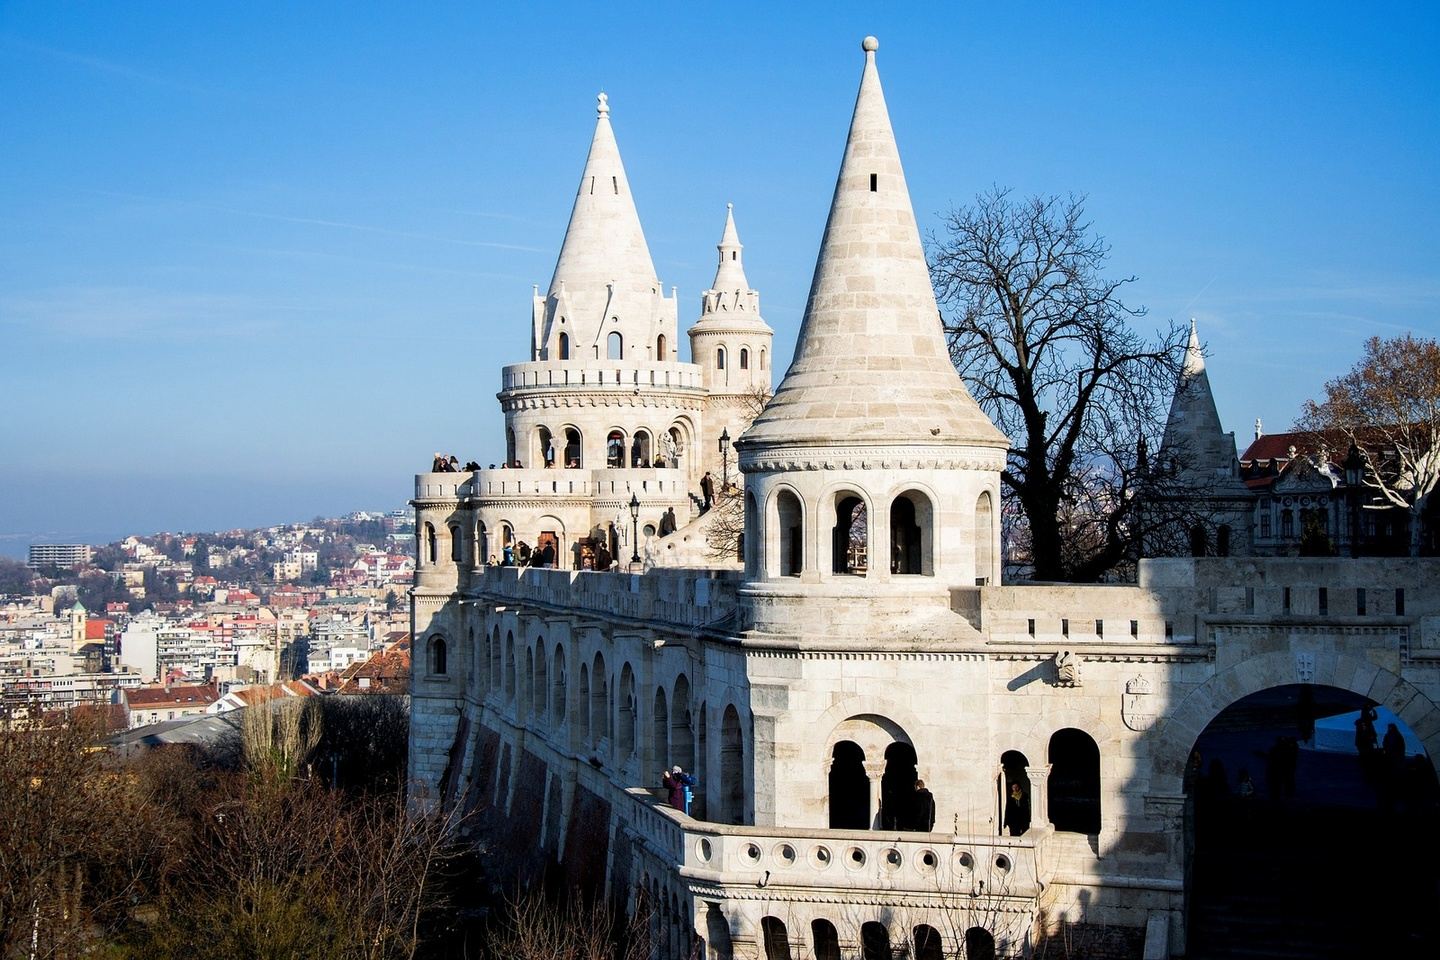 Key sights of Budapest